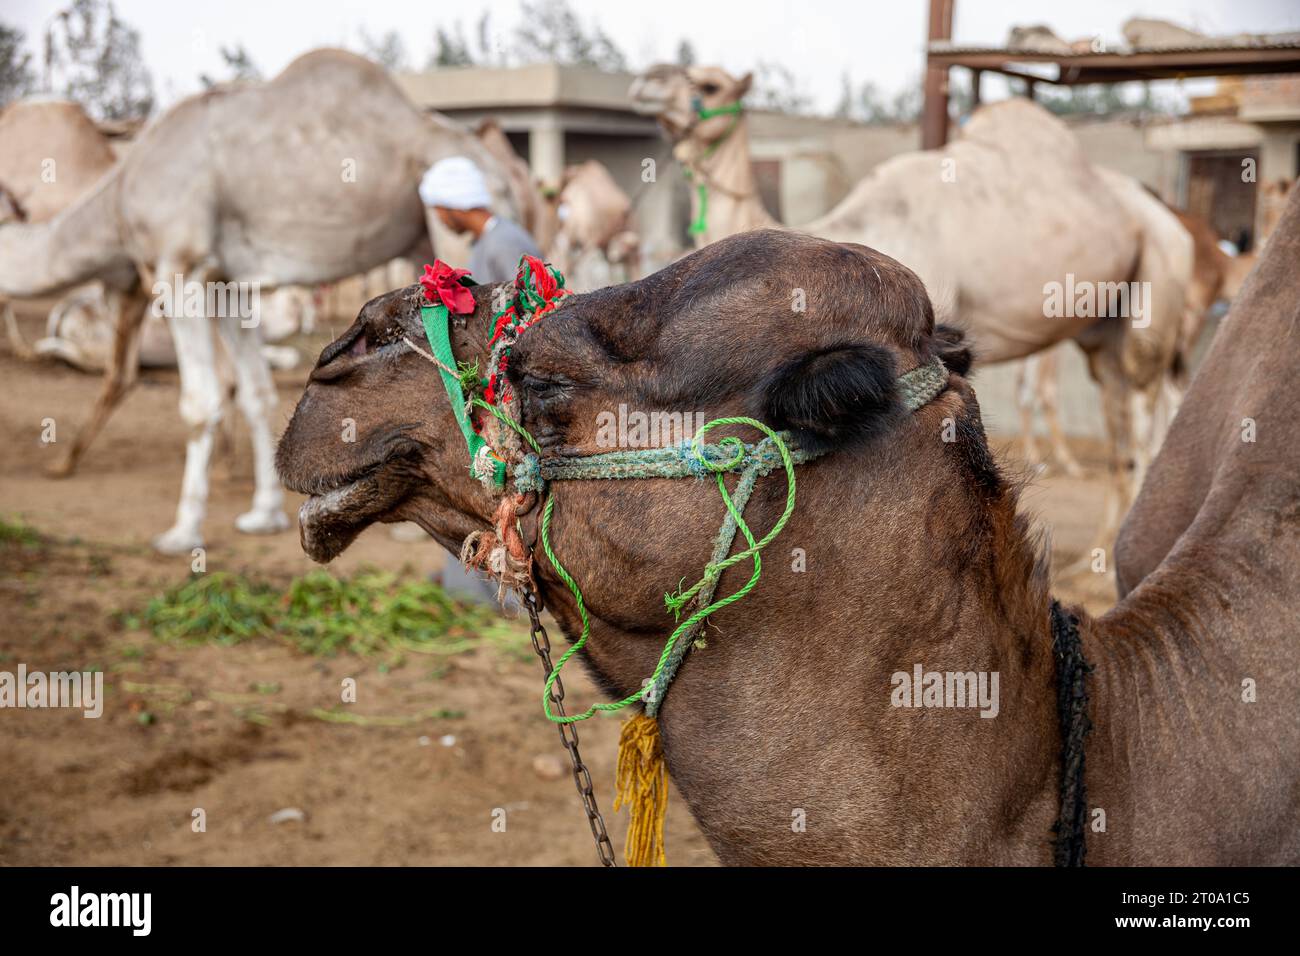 Egypt, Cairo, Birqash, Camel Market - Moroccan camel Stock Photo